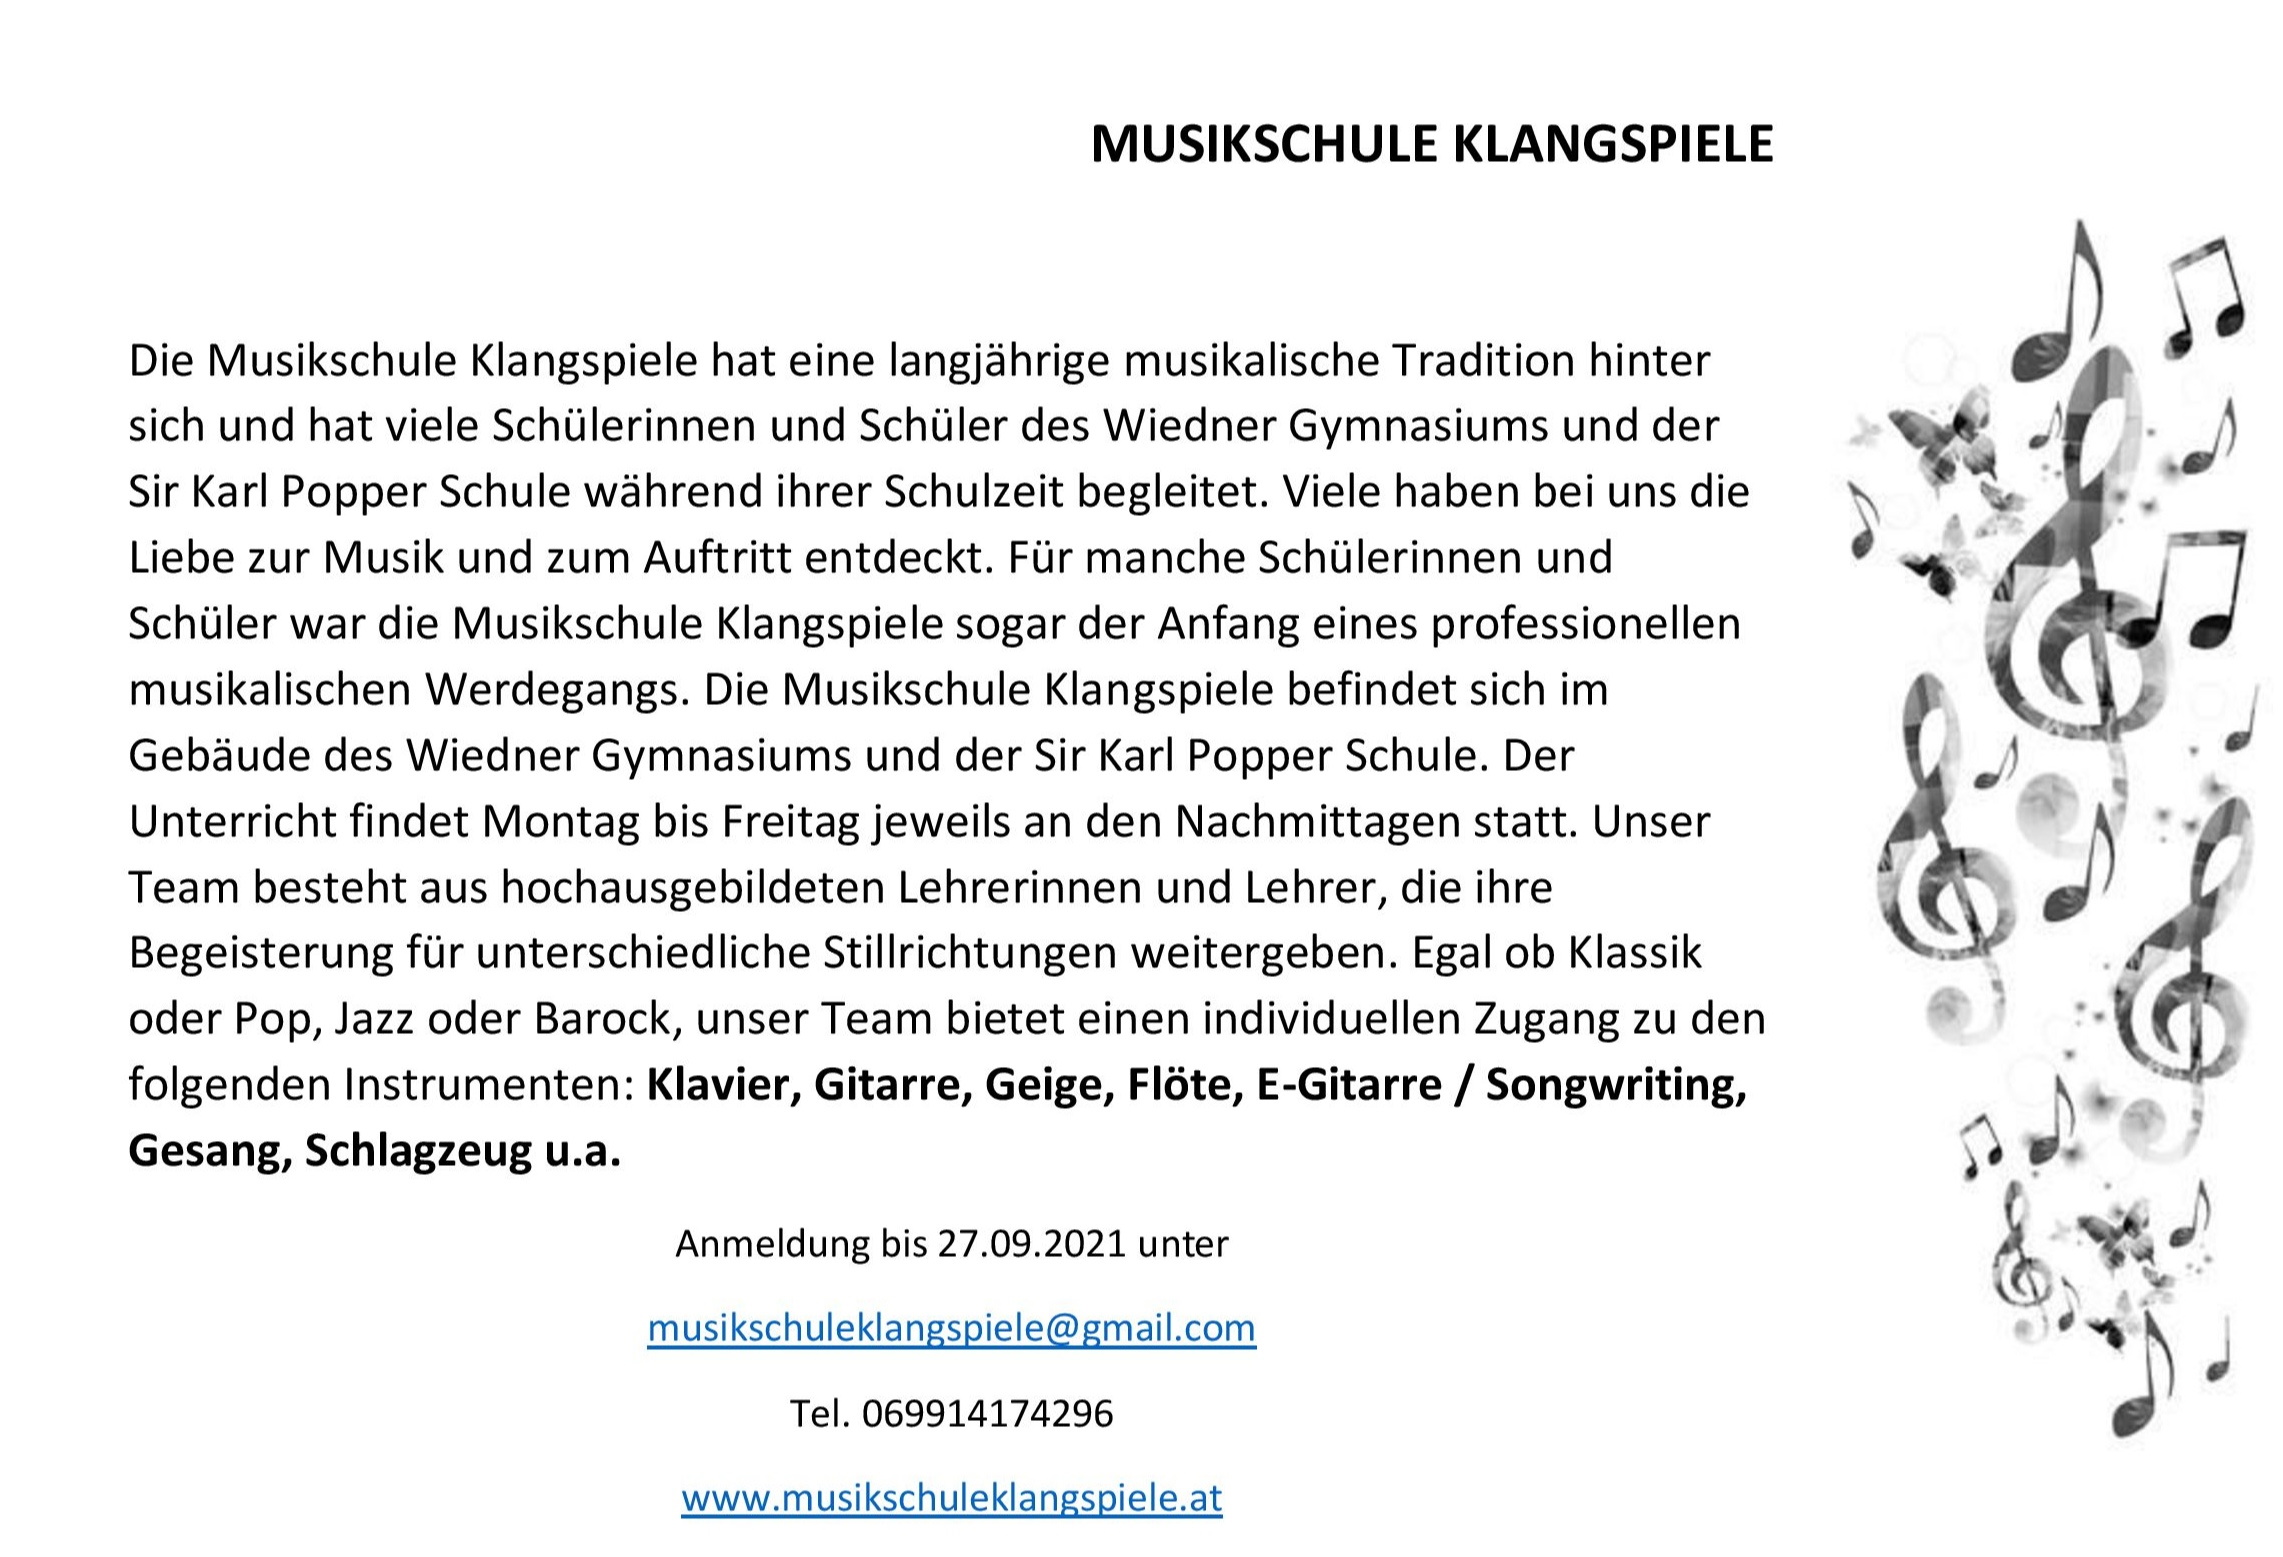 homepage: https://musikschuleklangspiele.at